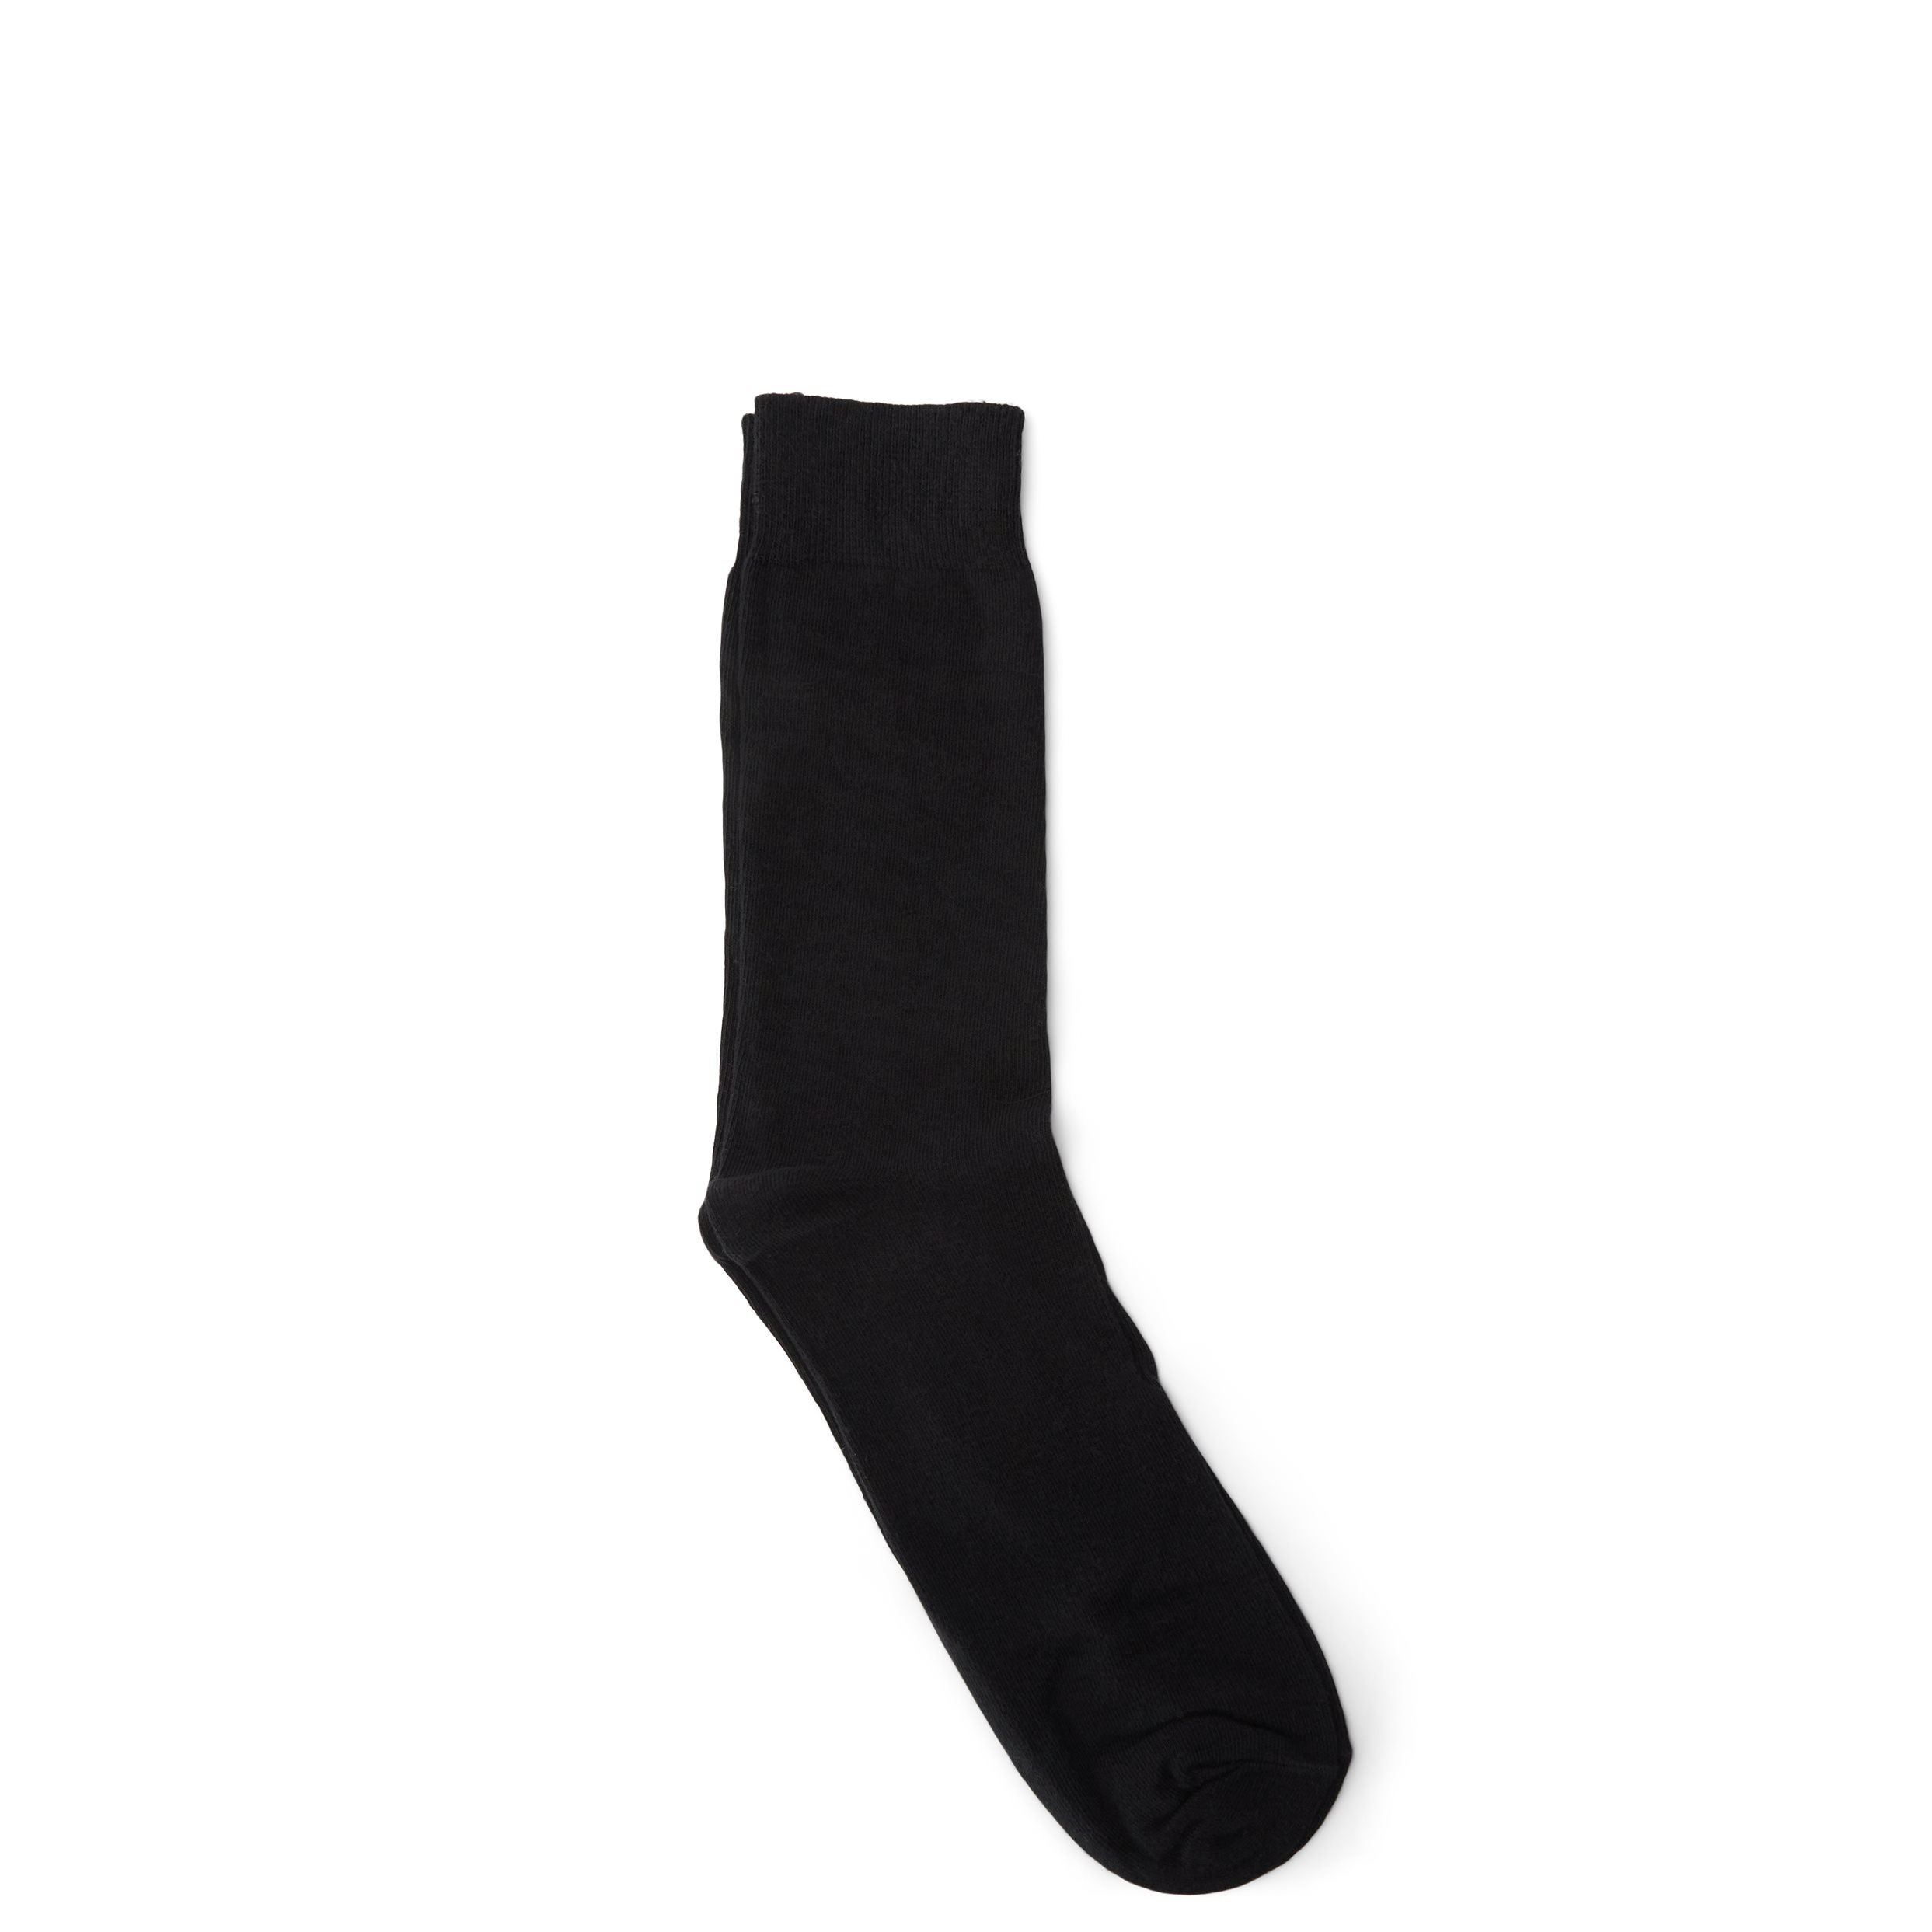 qUINT Socks CARLO 115-12580 Black